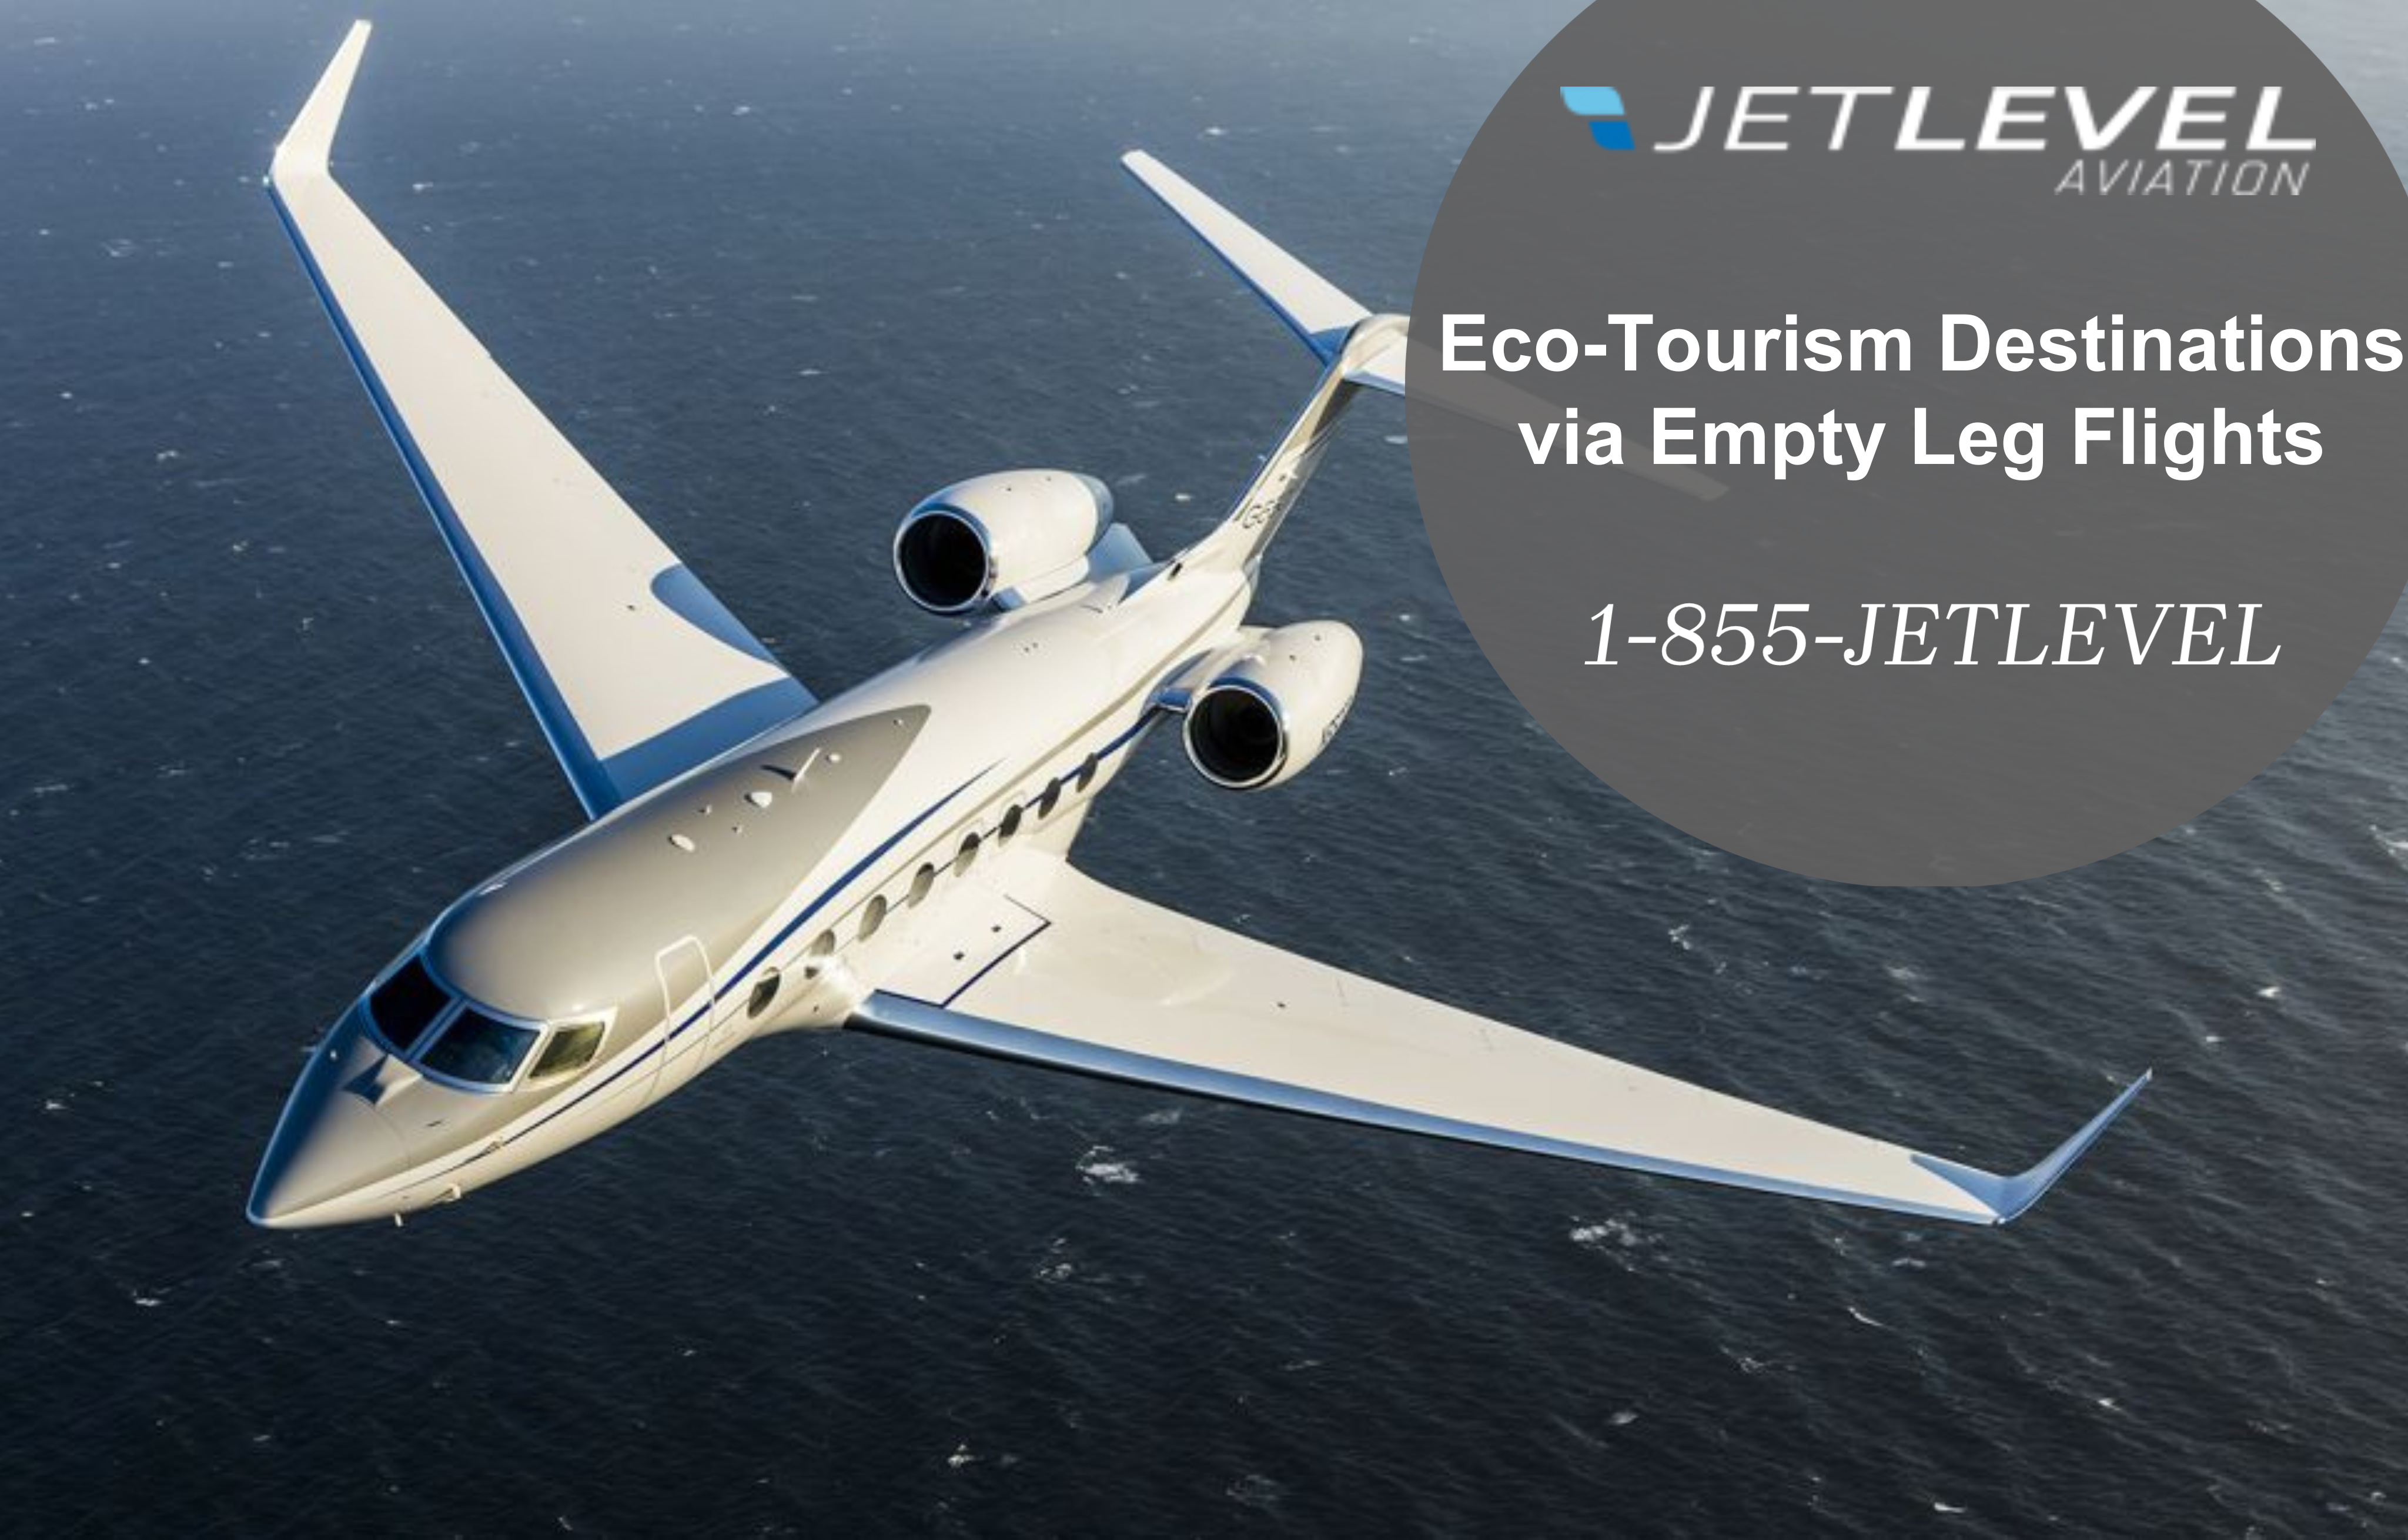 Eco-Tourism Destinations via Empty Leg Flights